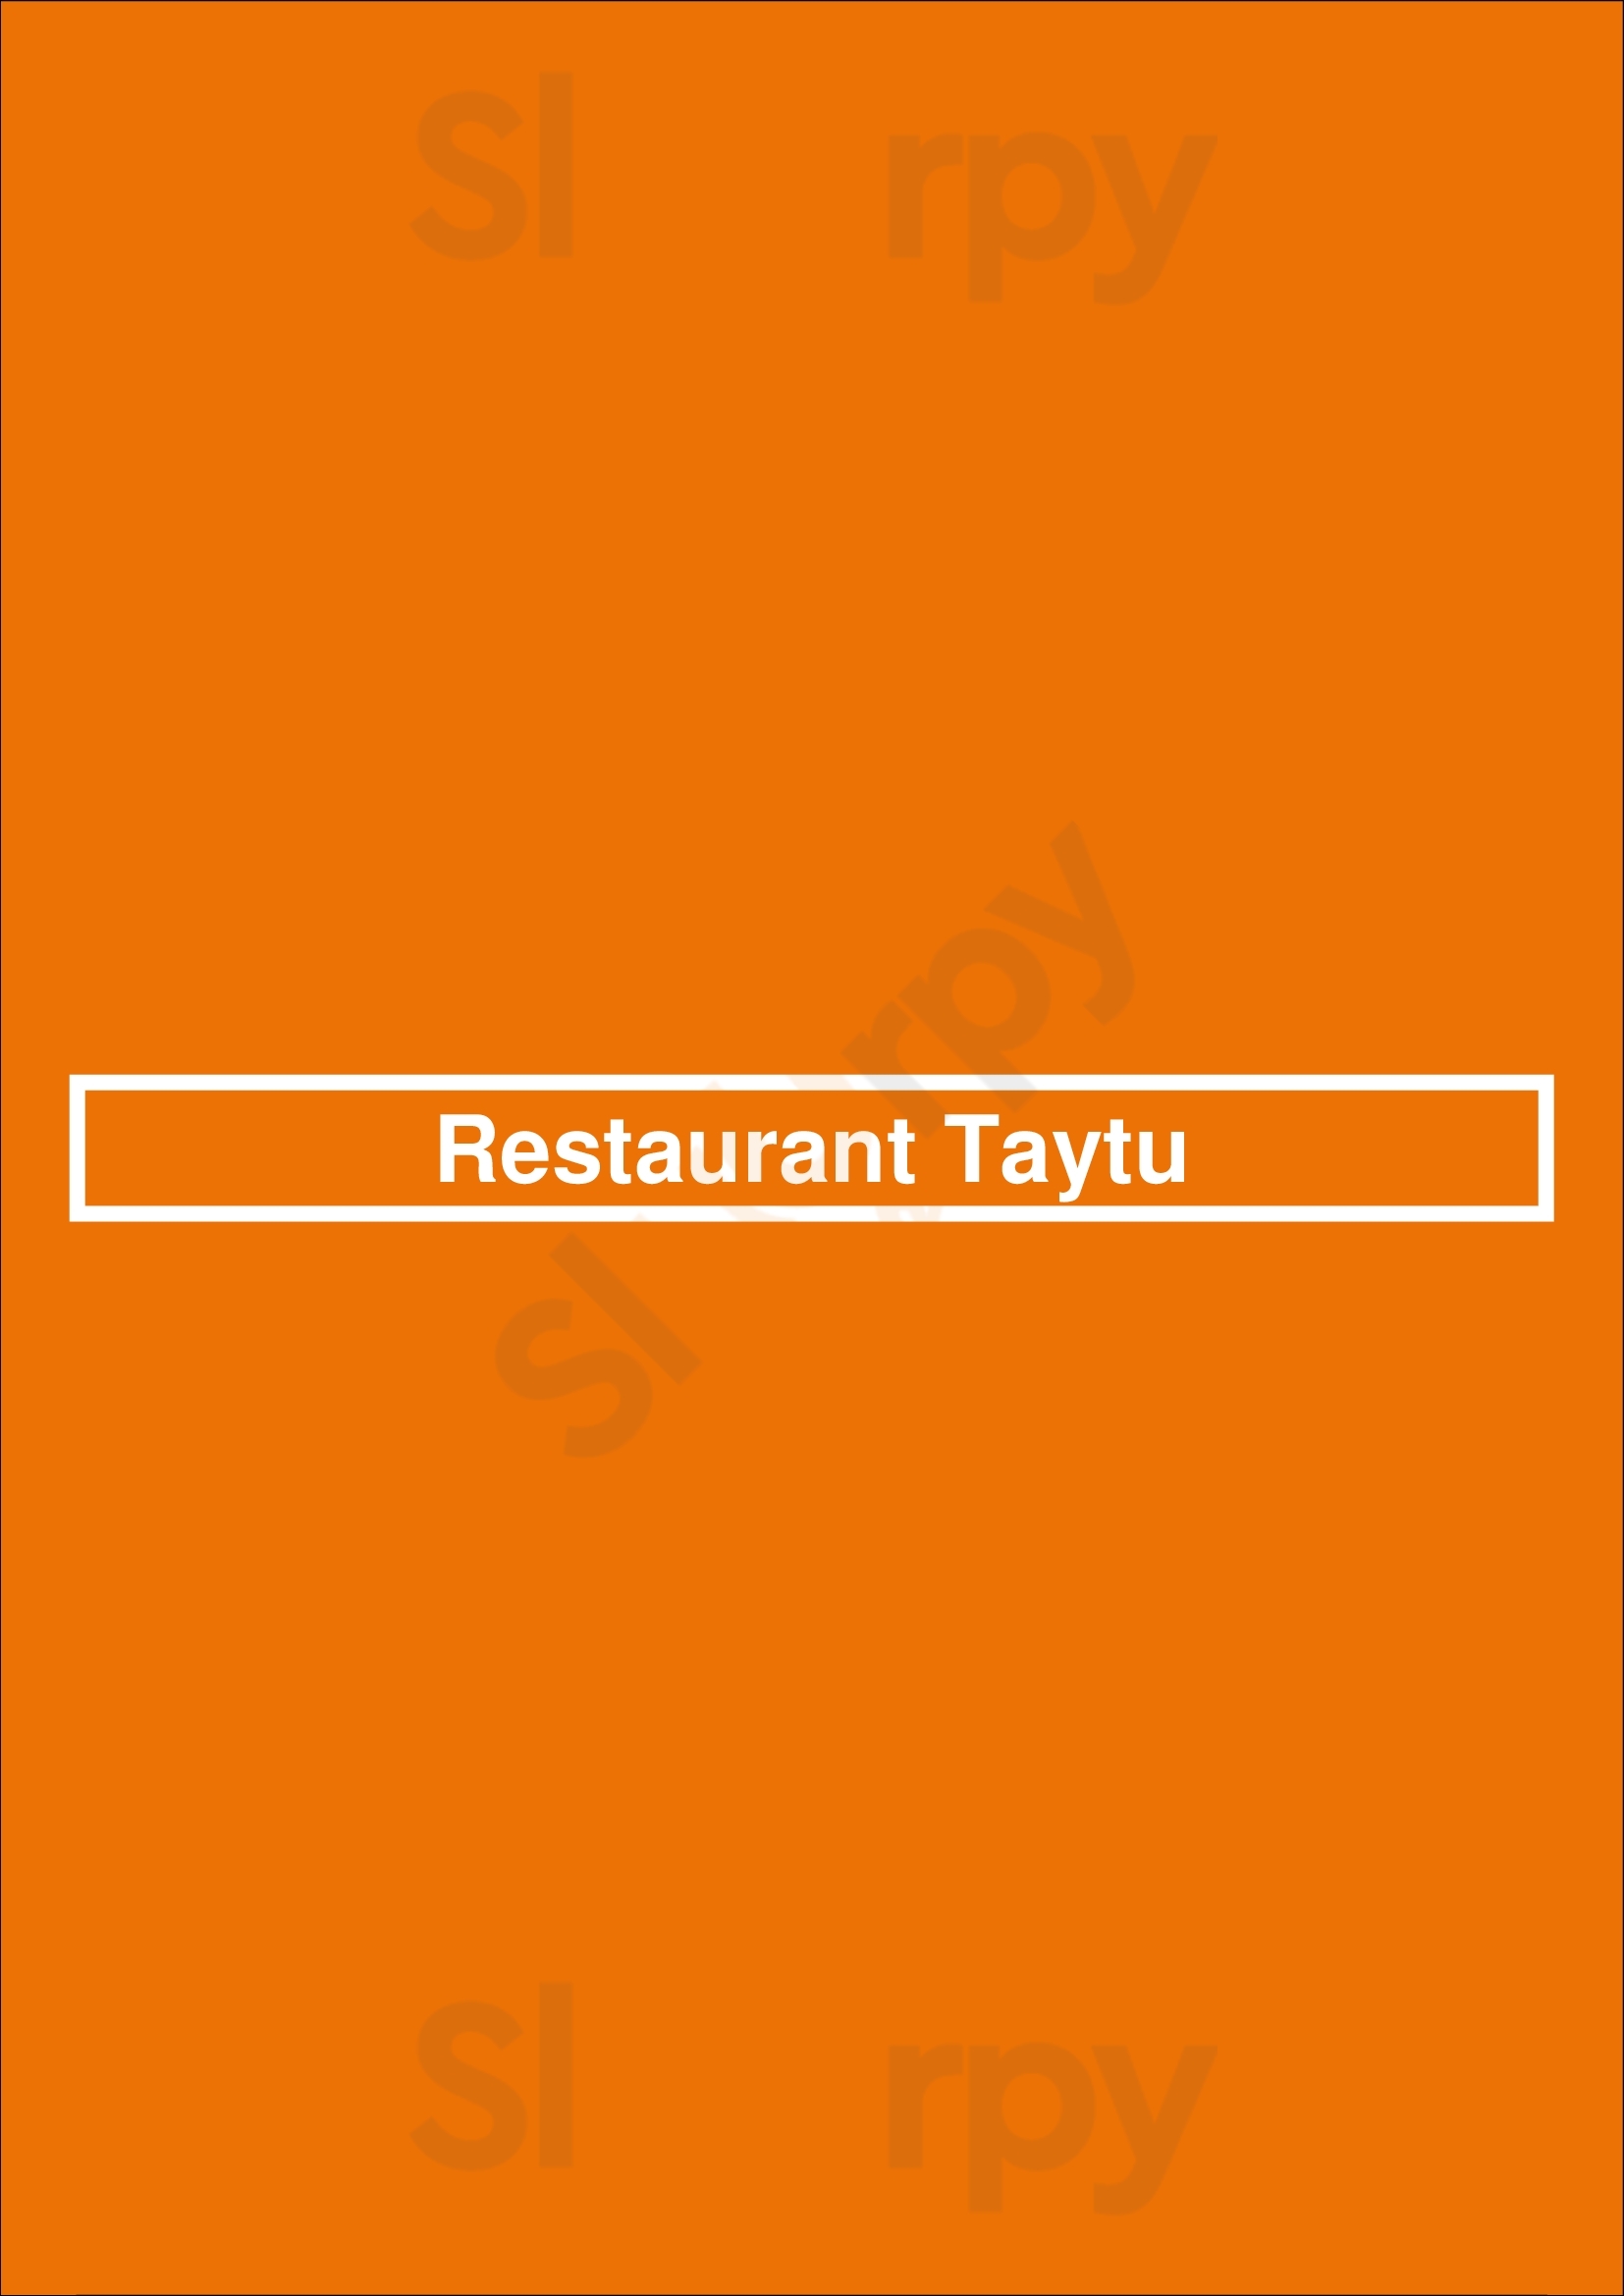 Restaurant Taytu Amsterdam Menu - 1